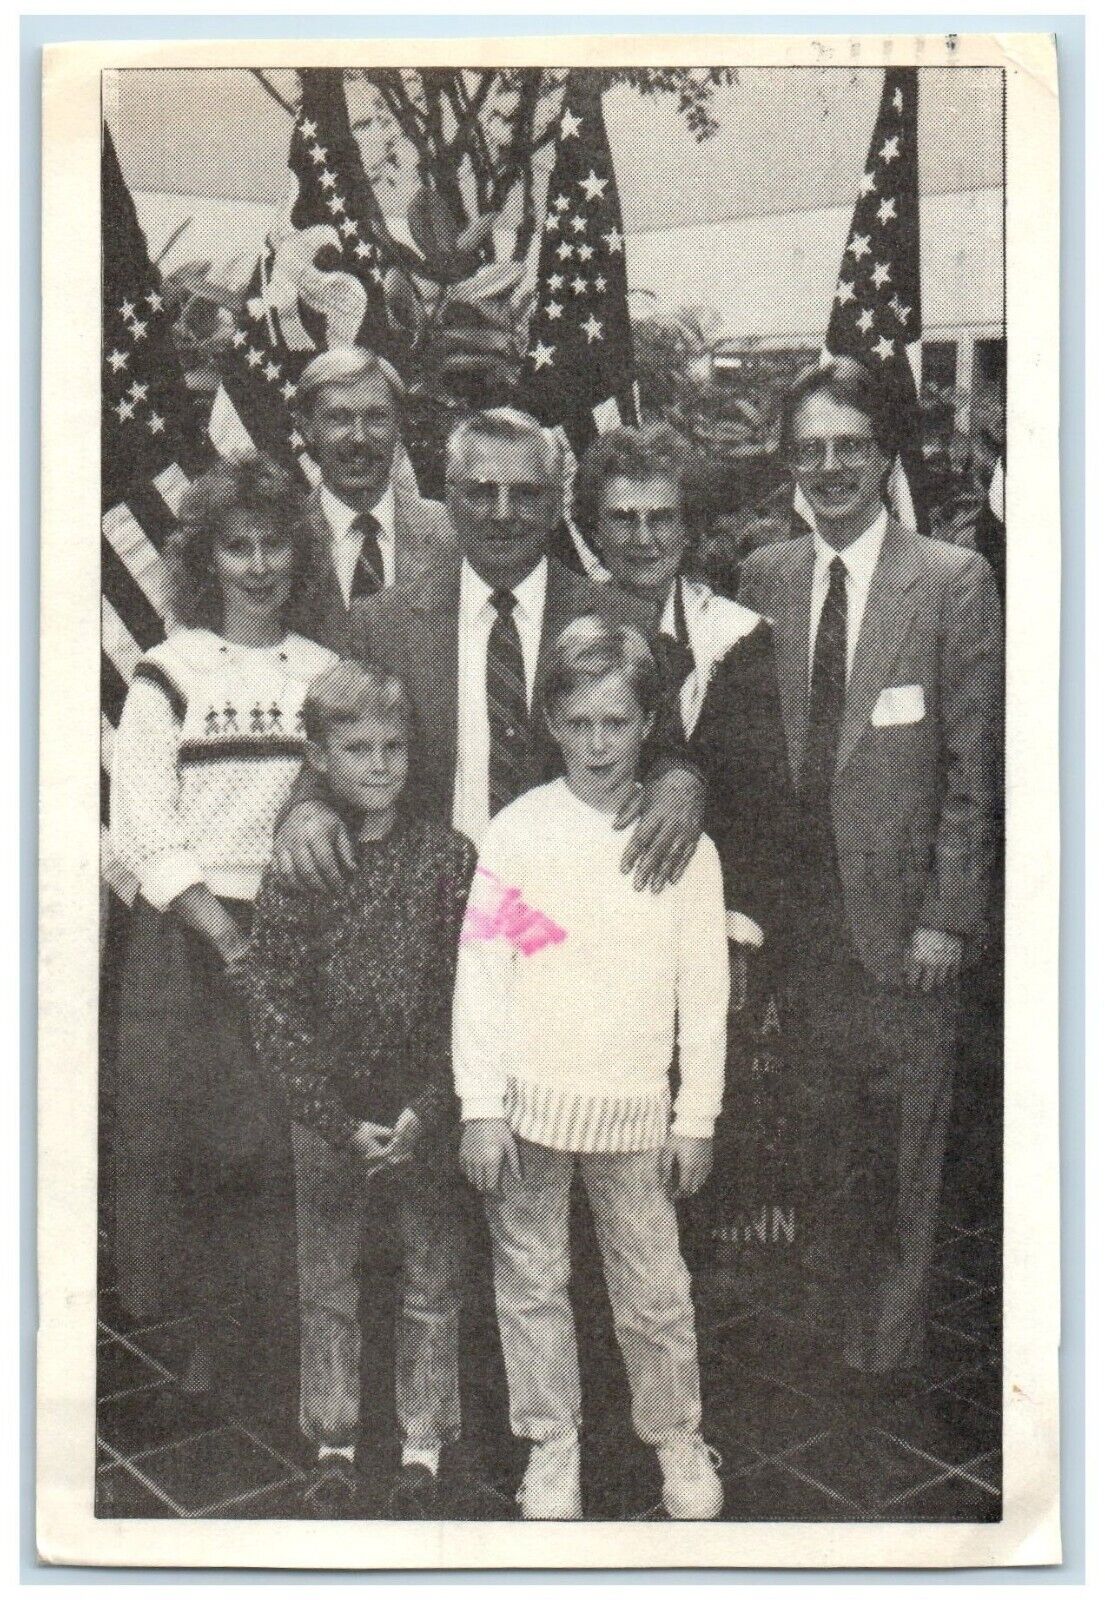 1988 Bill Eckholm Pow Medal Willmar Minnesota MN Posted Vintage Postcard